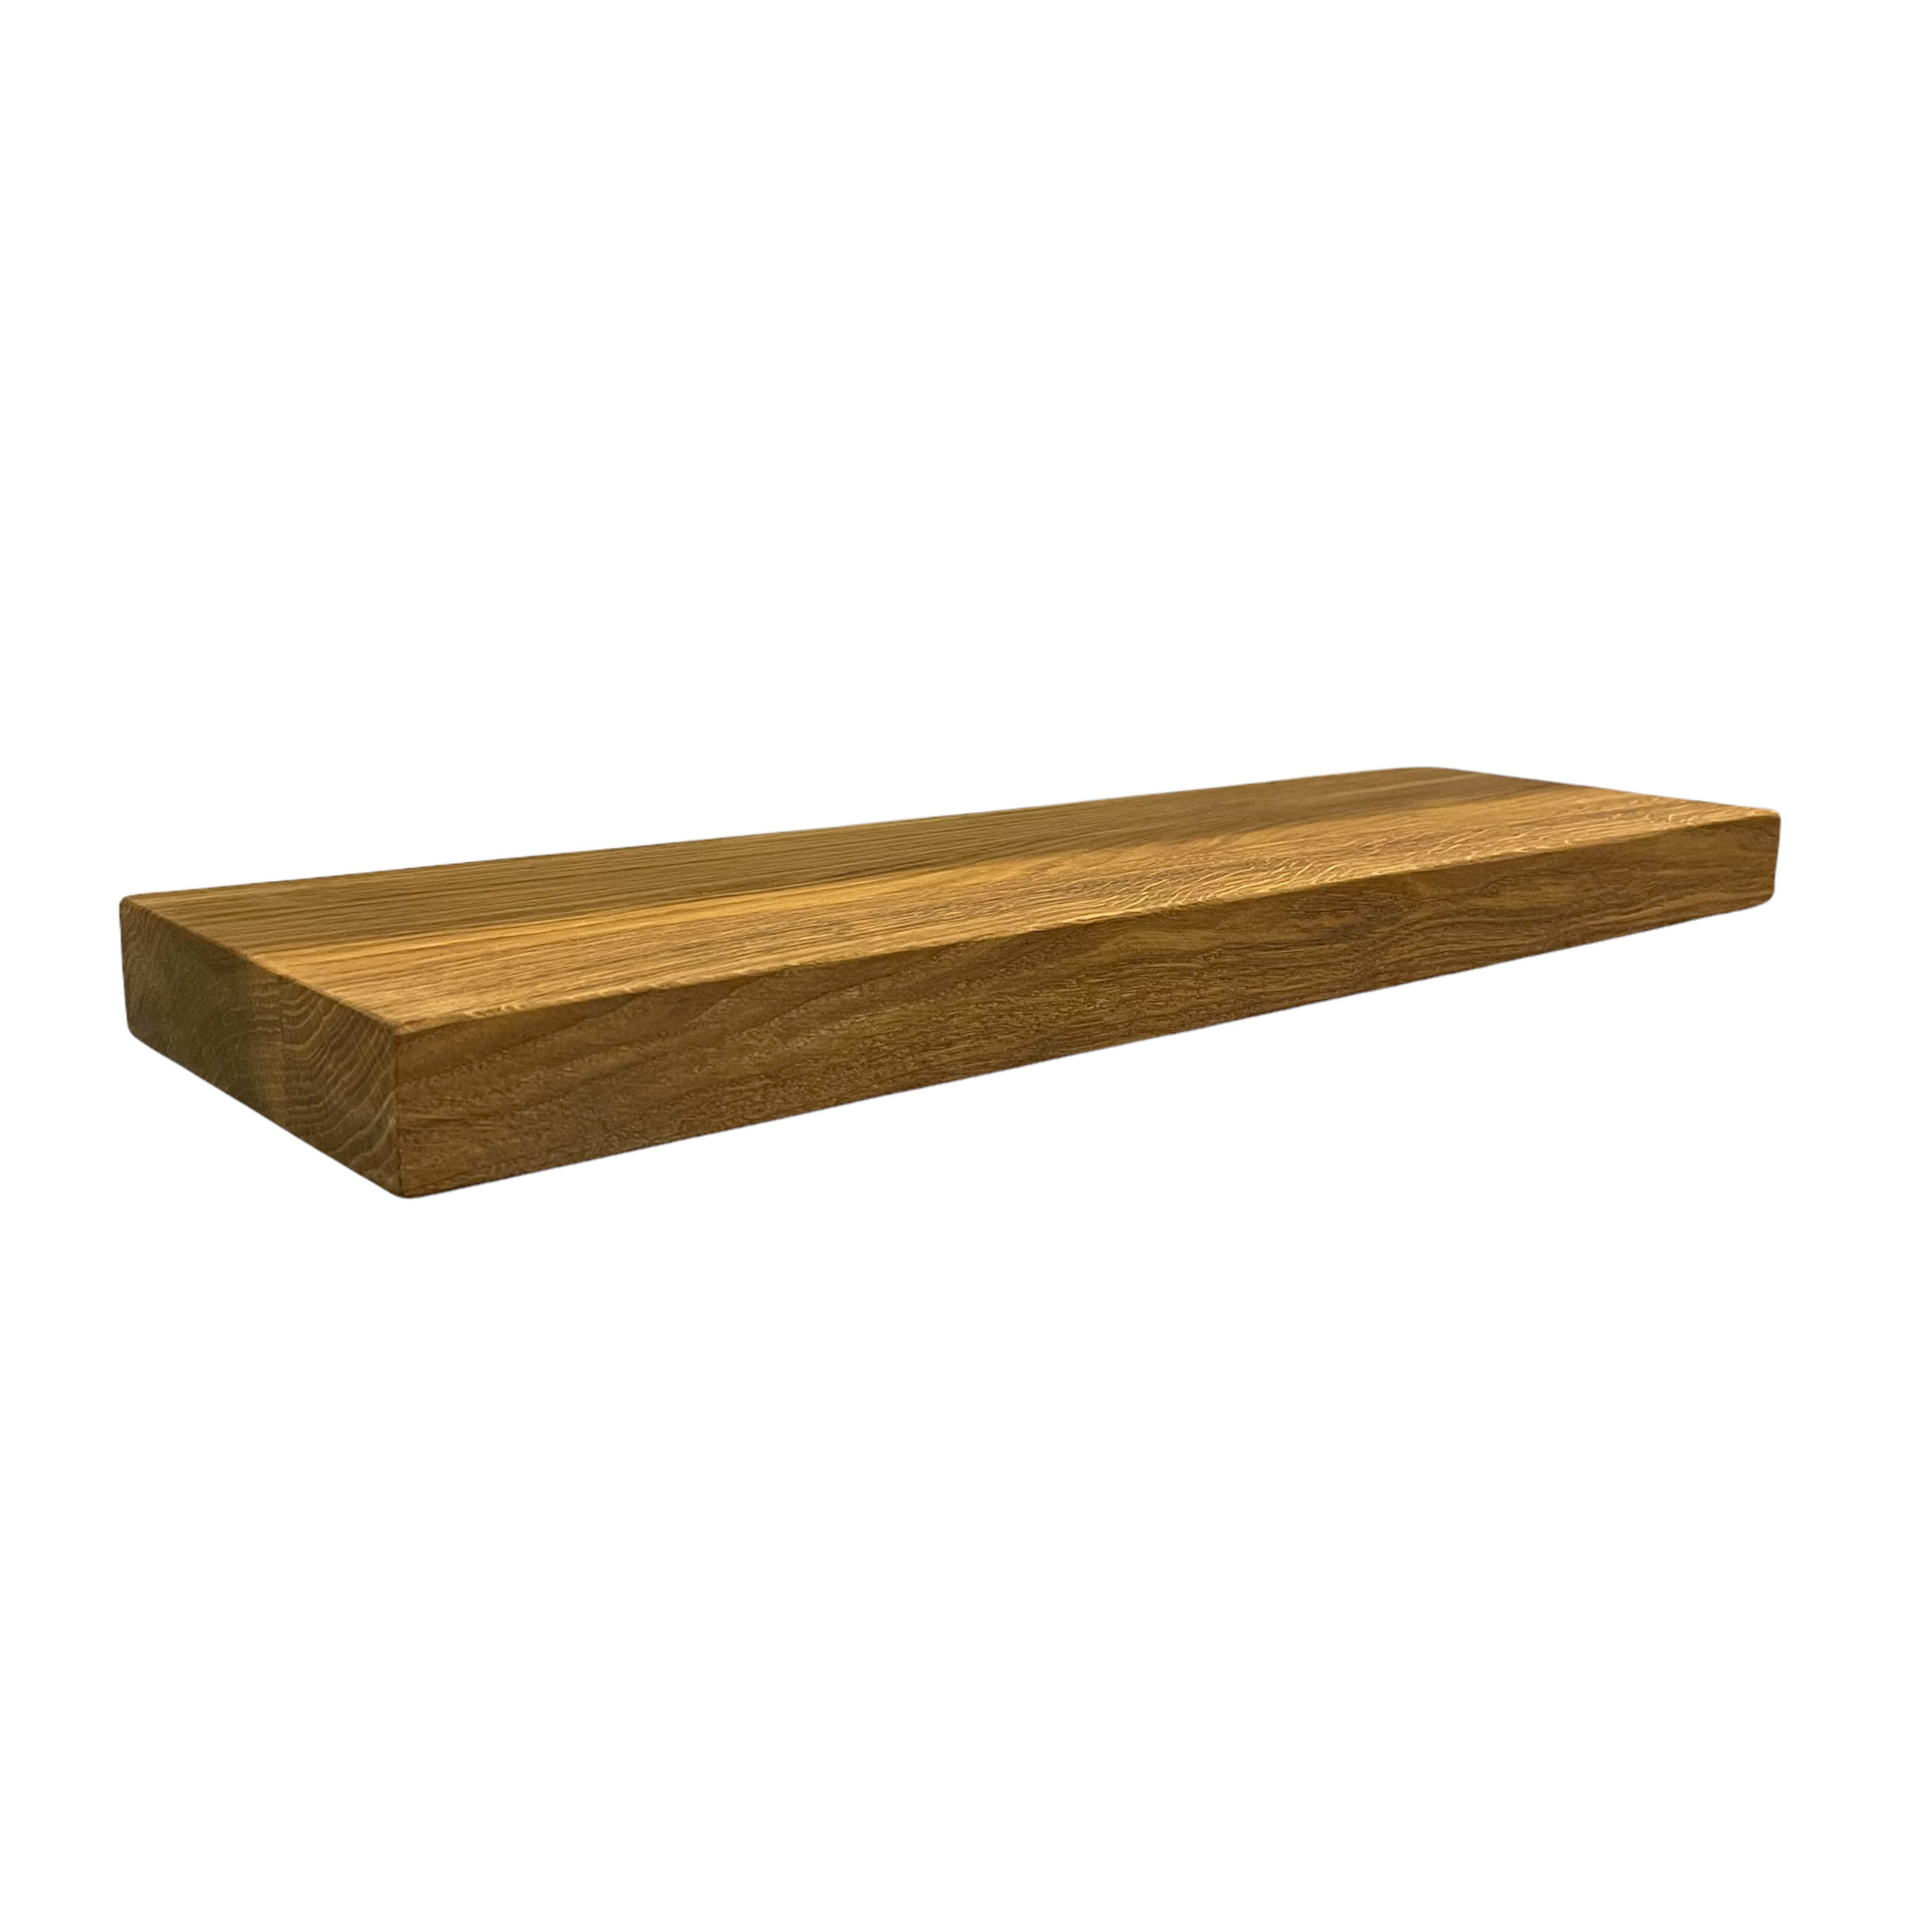 Wood & Work Houten wandplank - Oak - Klein - 4cm dik eiken - Recht